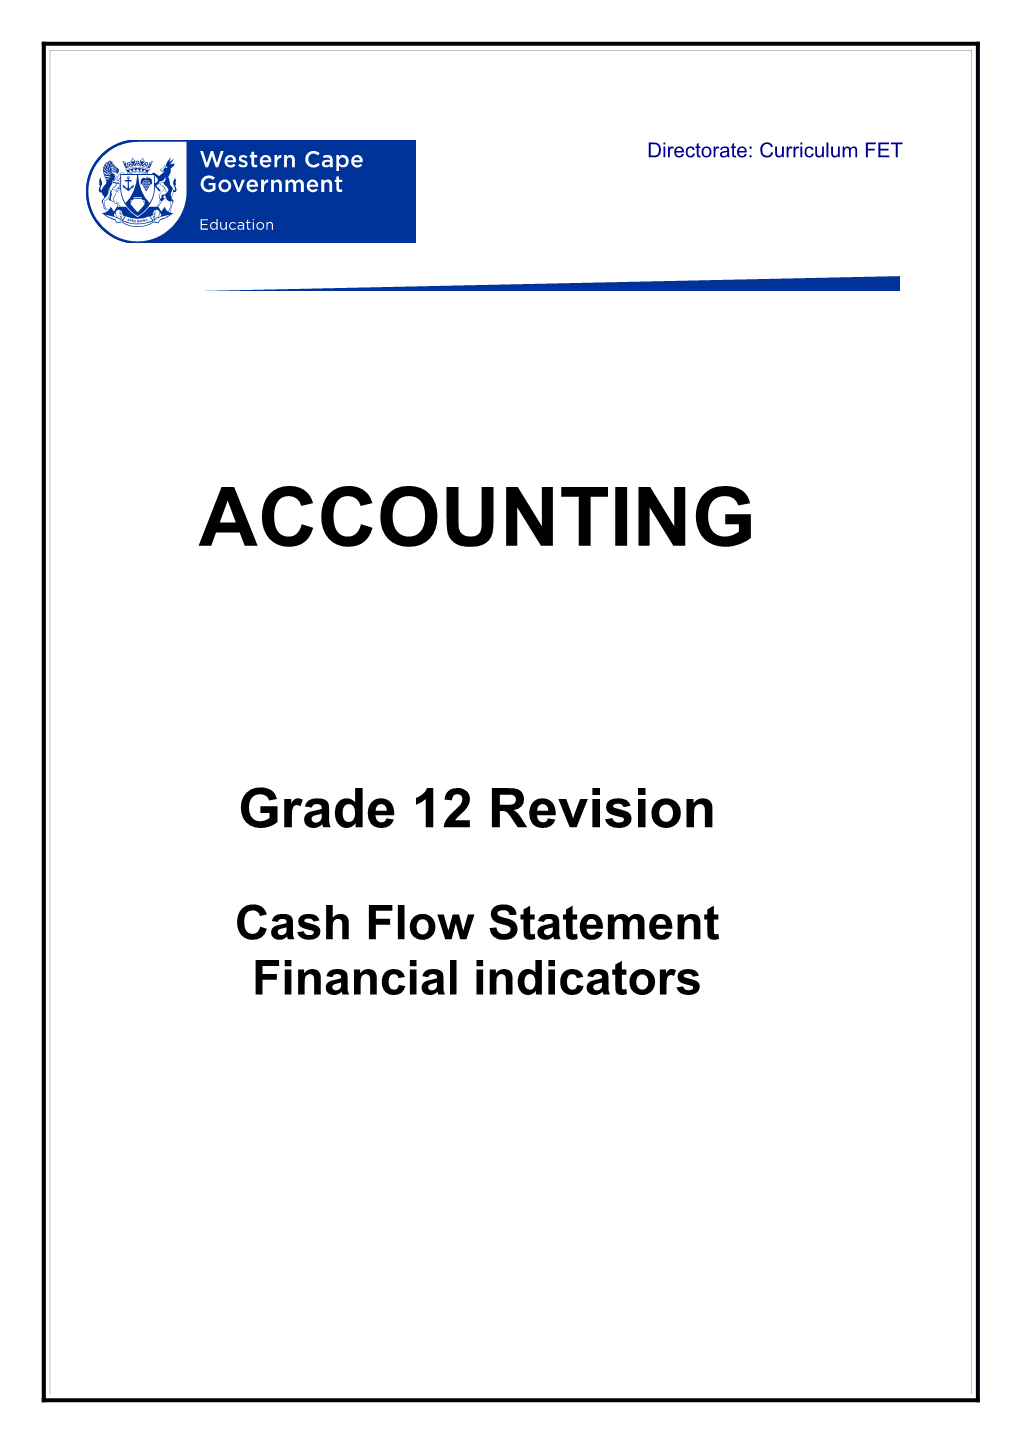 Fixed Assets, Cash Flow Statement, Analysis and Interpretation